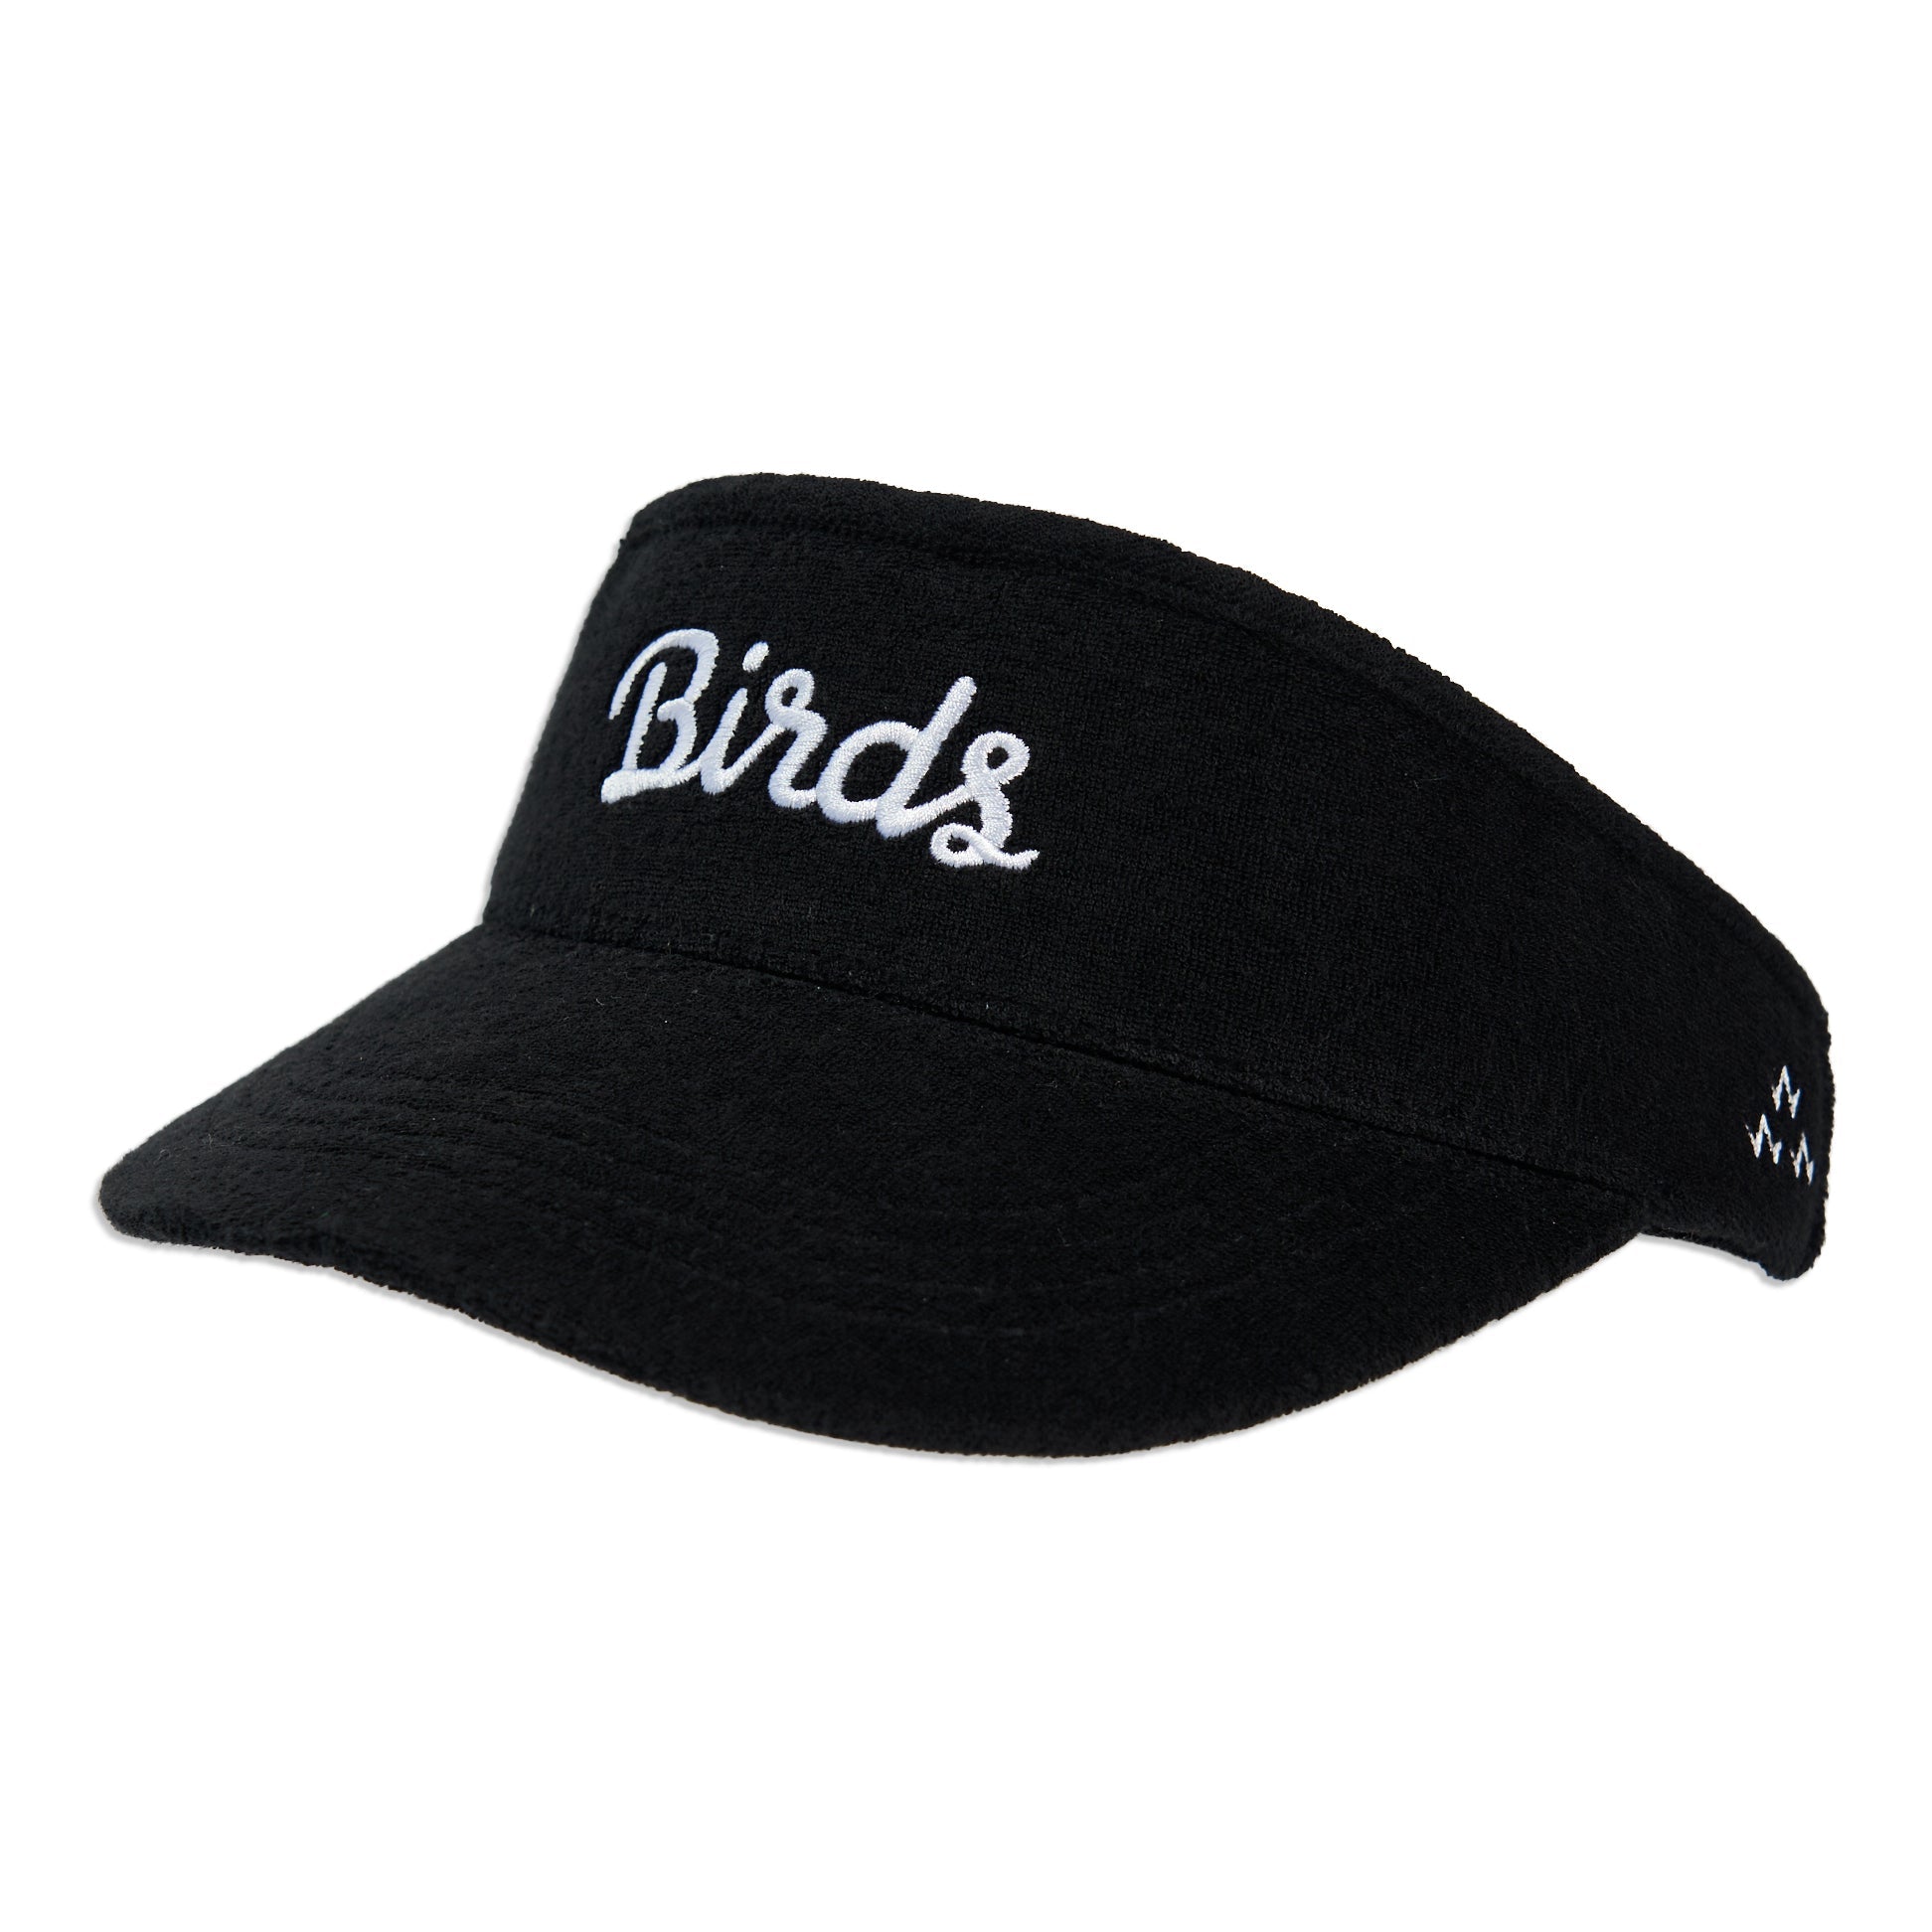 birds-of-condor-black-terry-towelling-cloth-visor-golf-hat-front